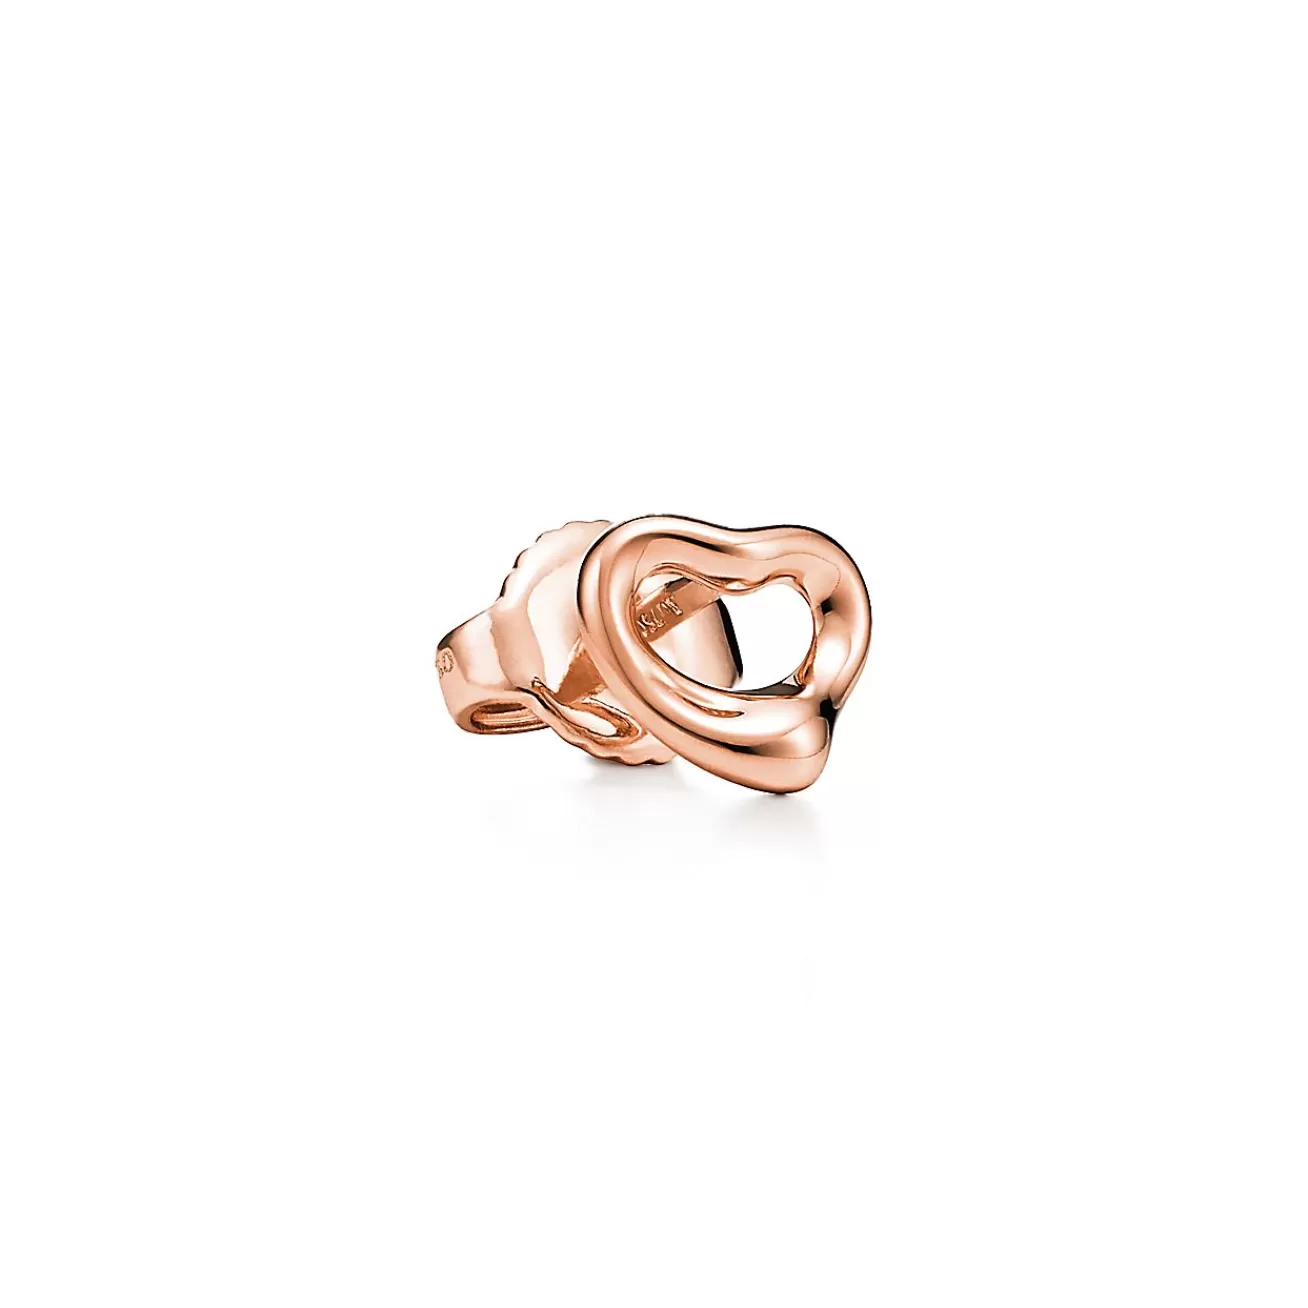 Tiffany & Co. Elsa Peretti® Open Heart earrings in 18k rose gold. More sizes available. | ^ Earrings | Rose Gold Jewelry